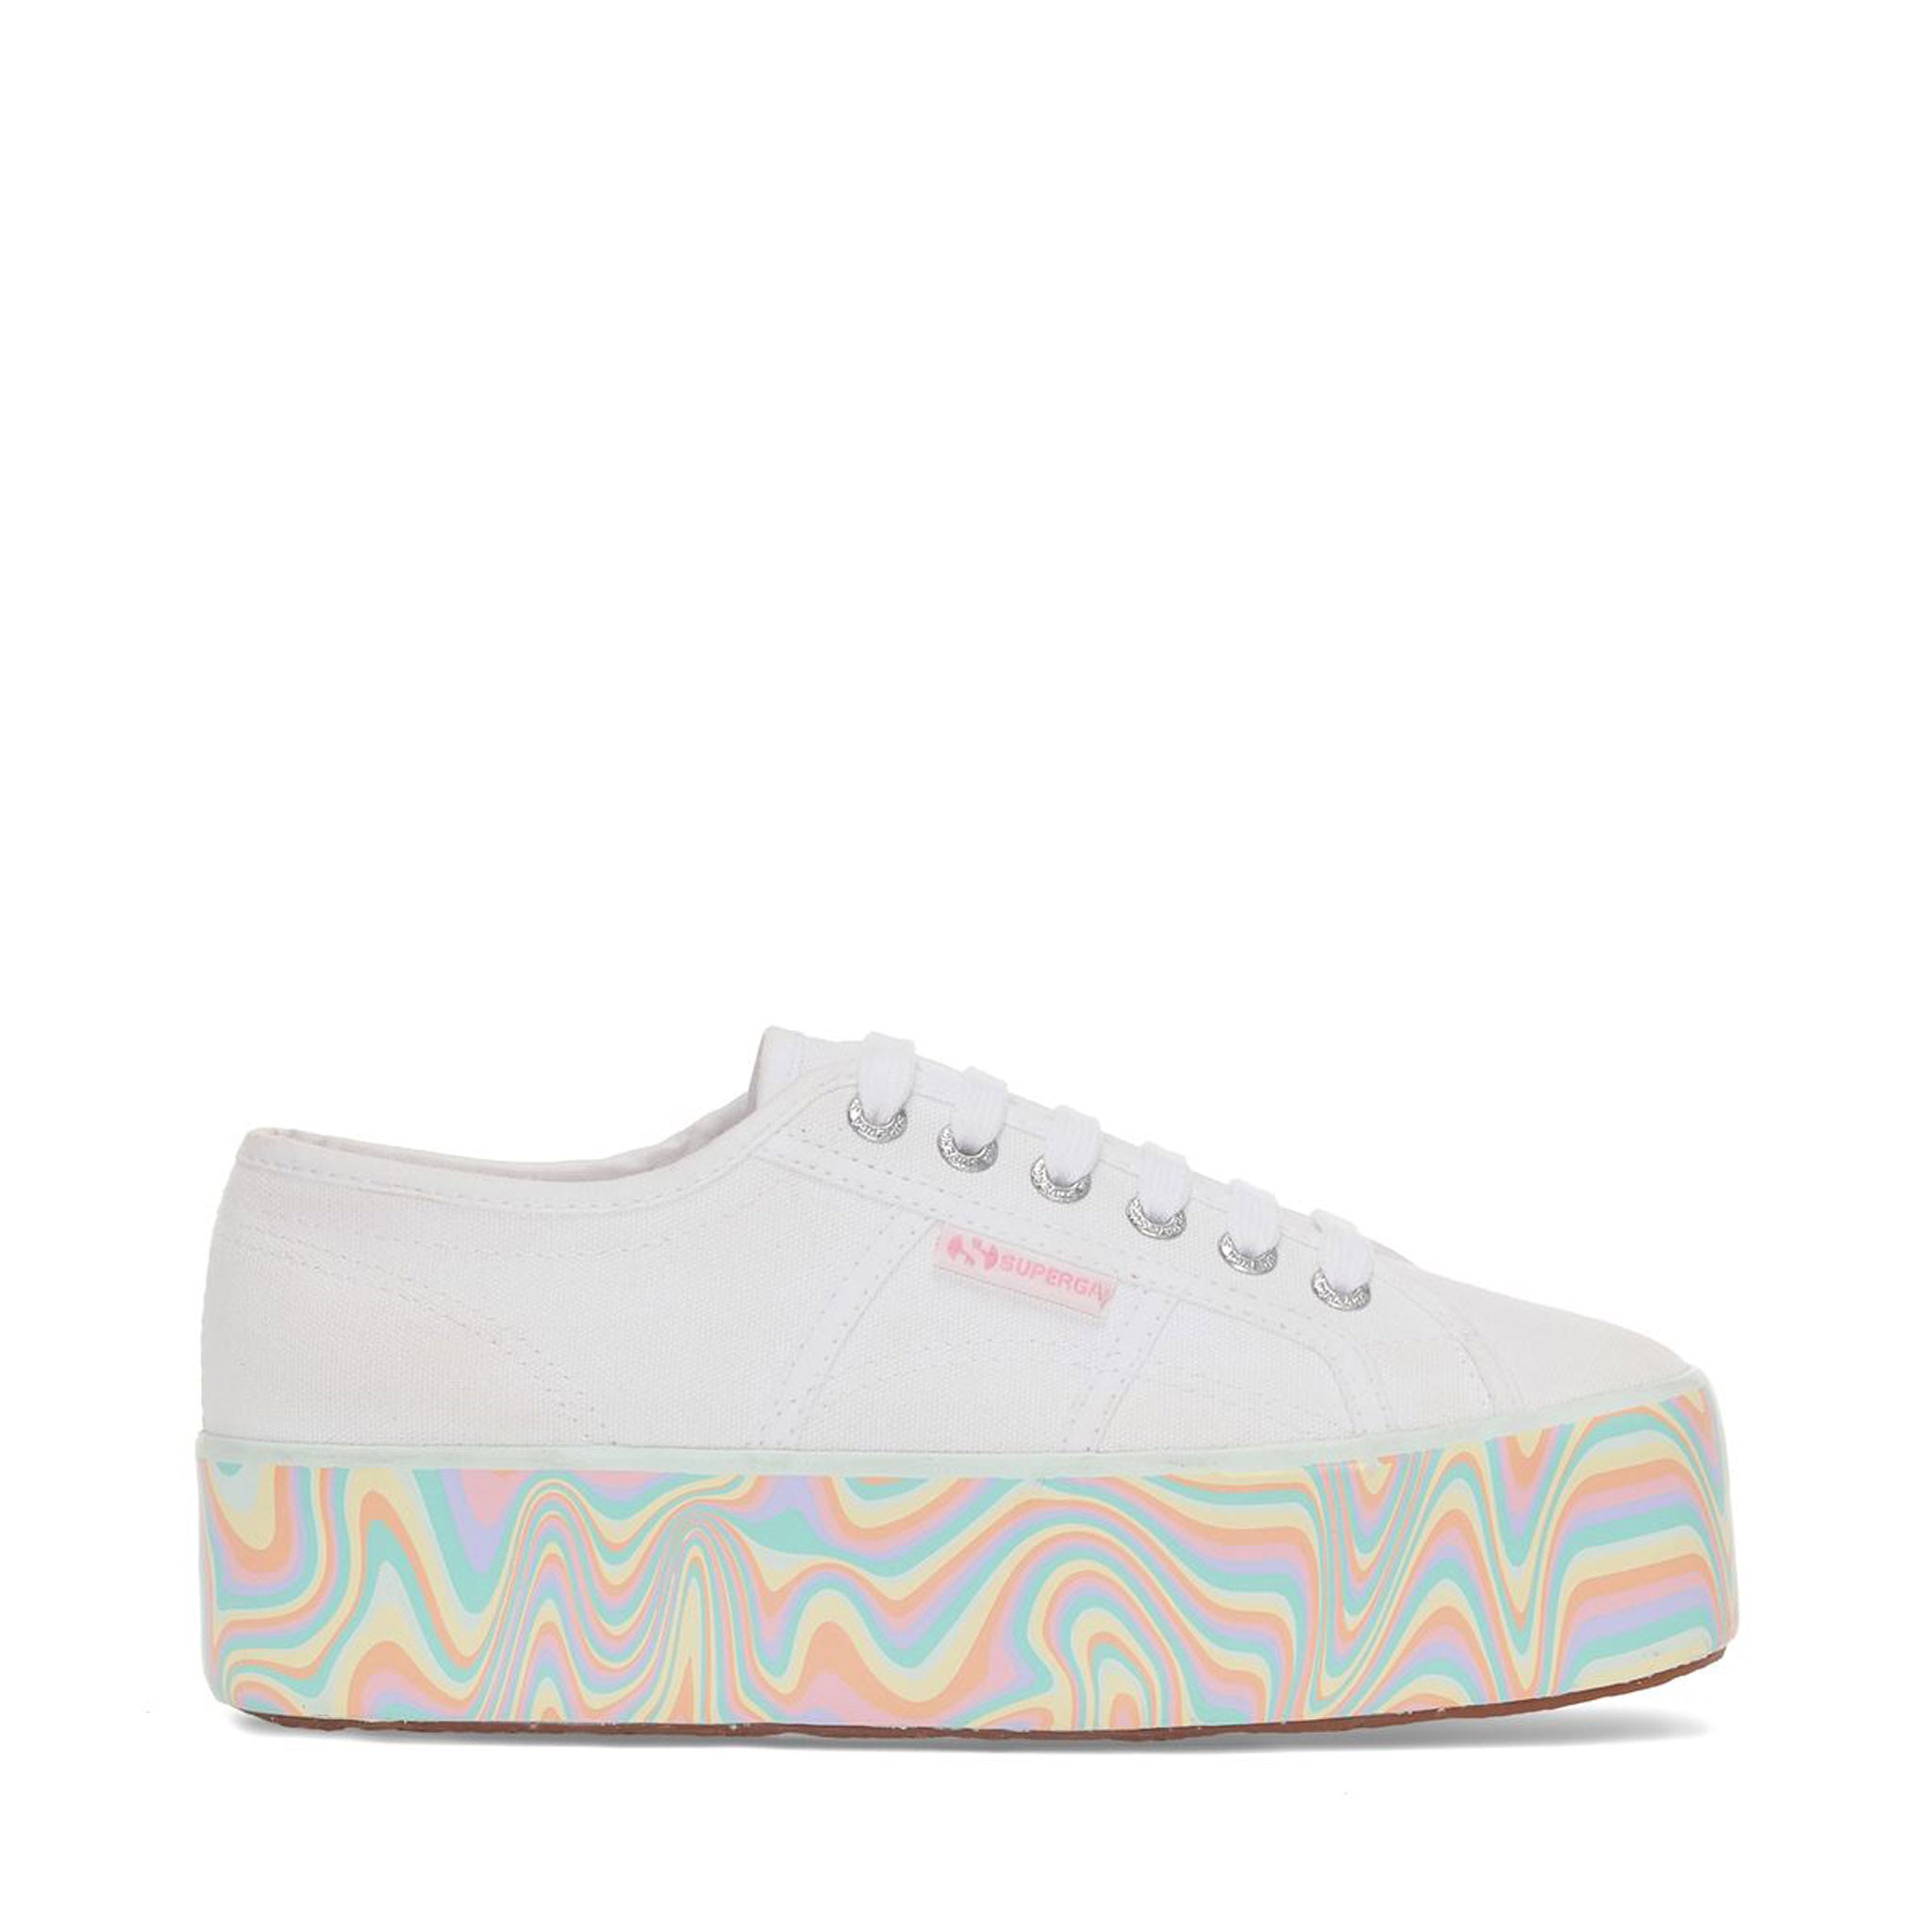 Superga 2790 Multicolor Liquify Sole Sneakers - White Multicolor Pastels. Side view.